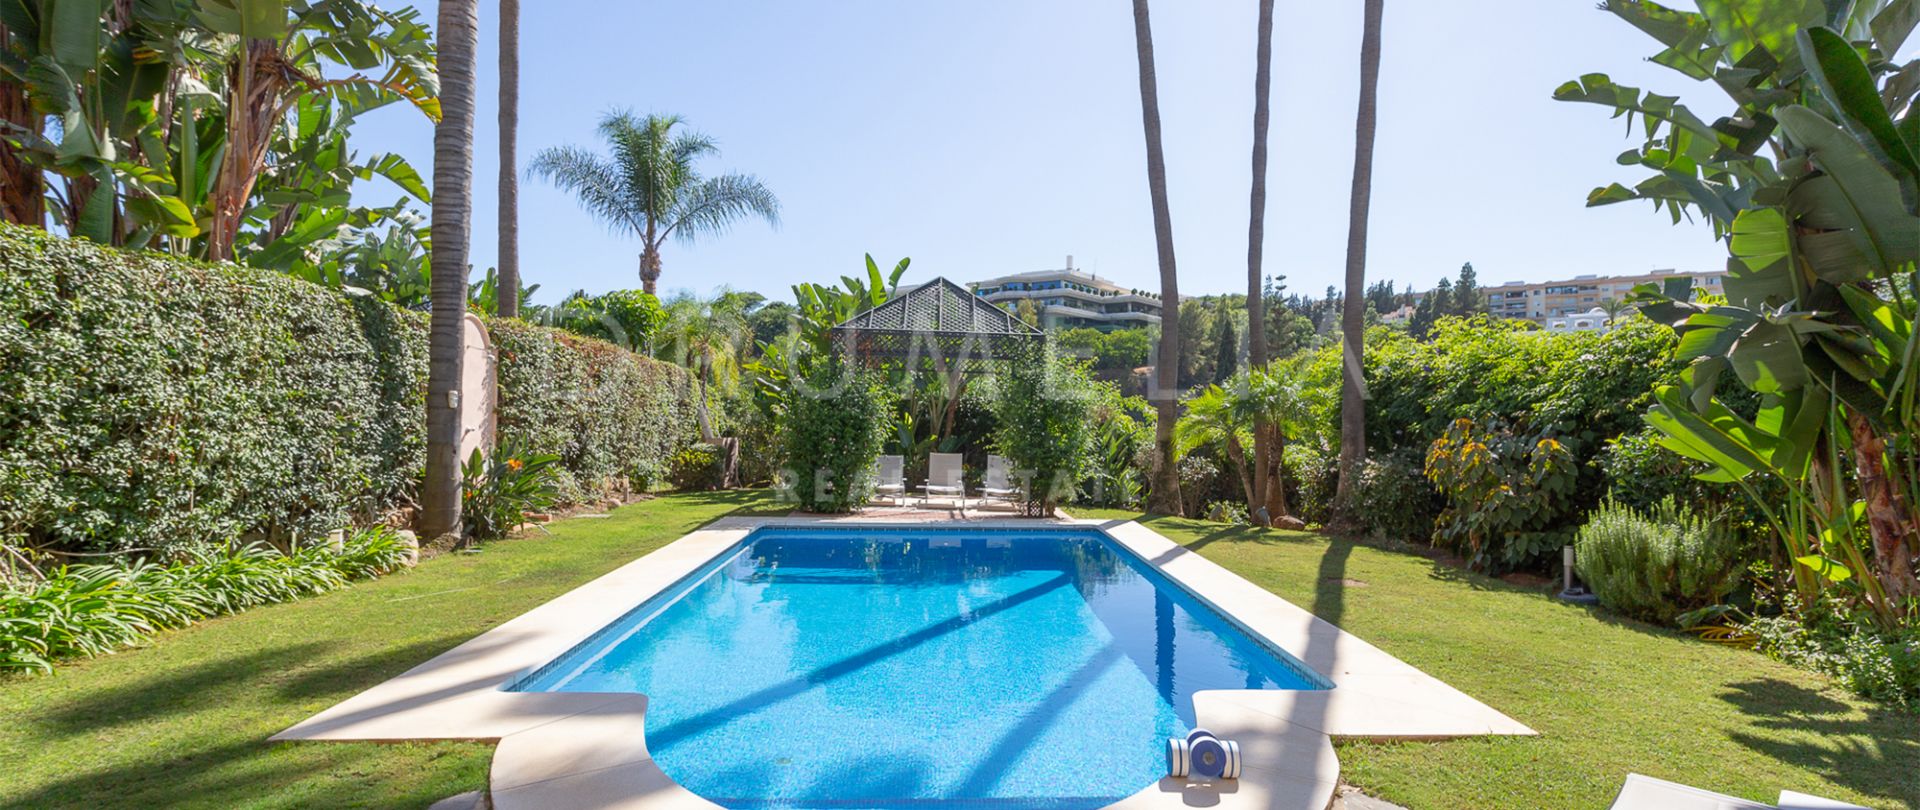 Beautiful, renovated Mediterranean style family villa for sale in Puerto Banús, Marbella